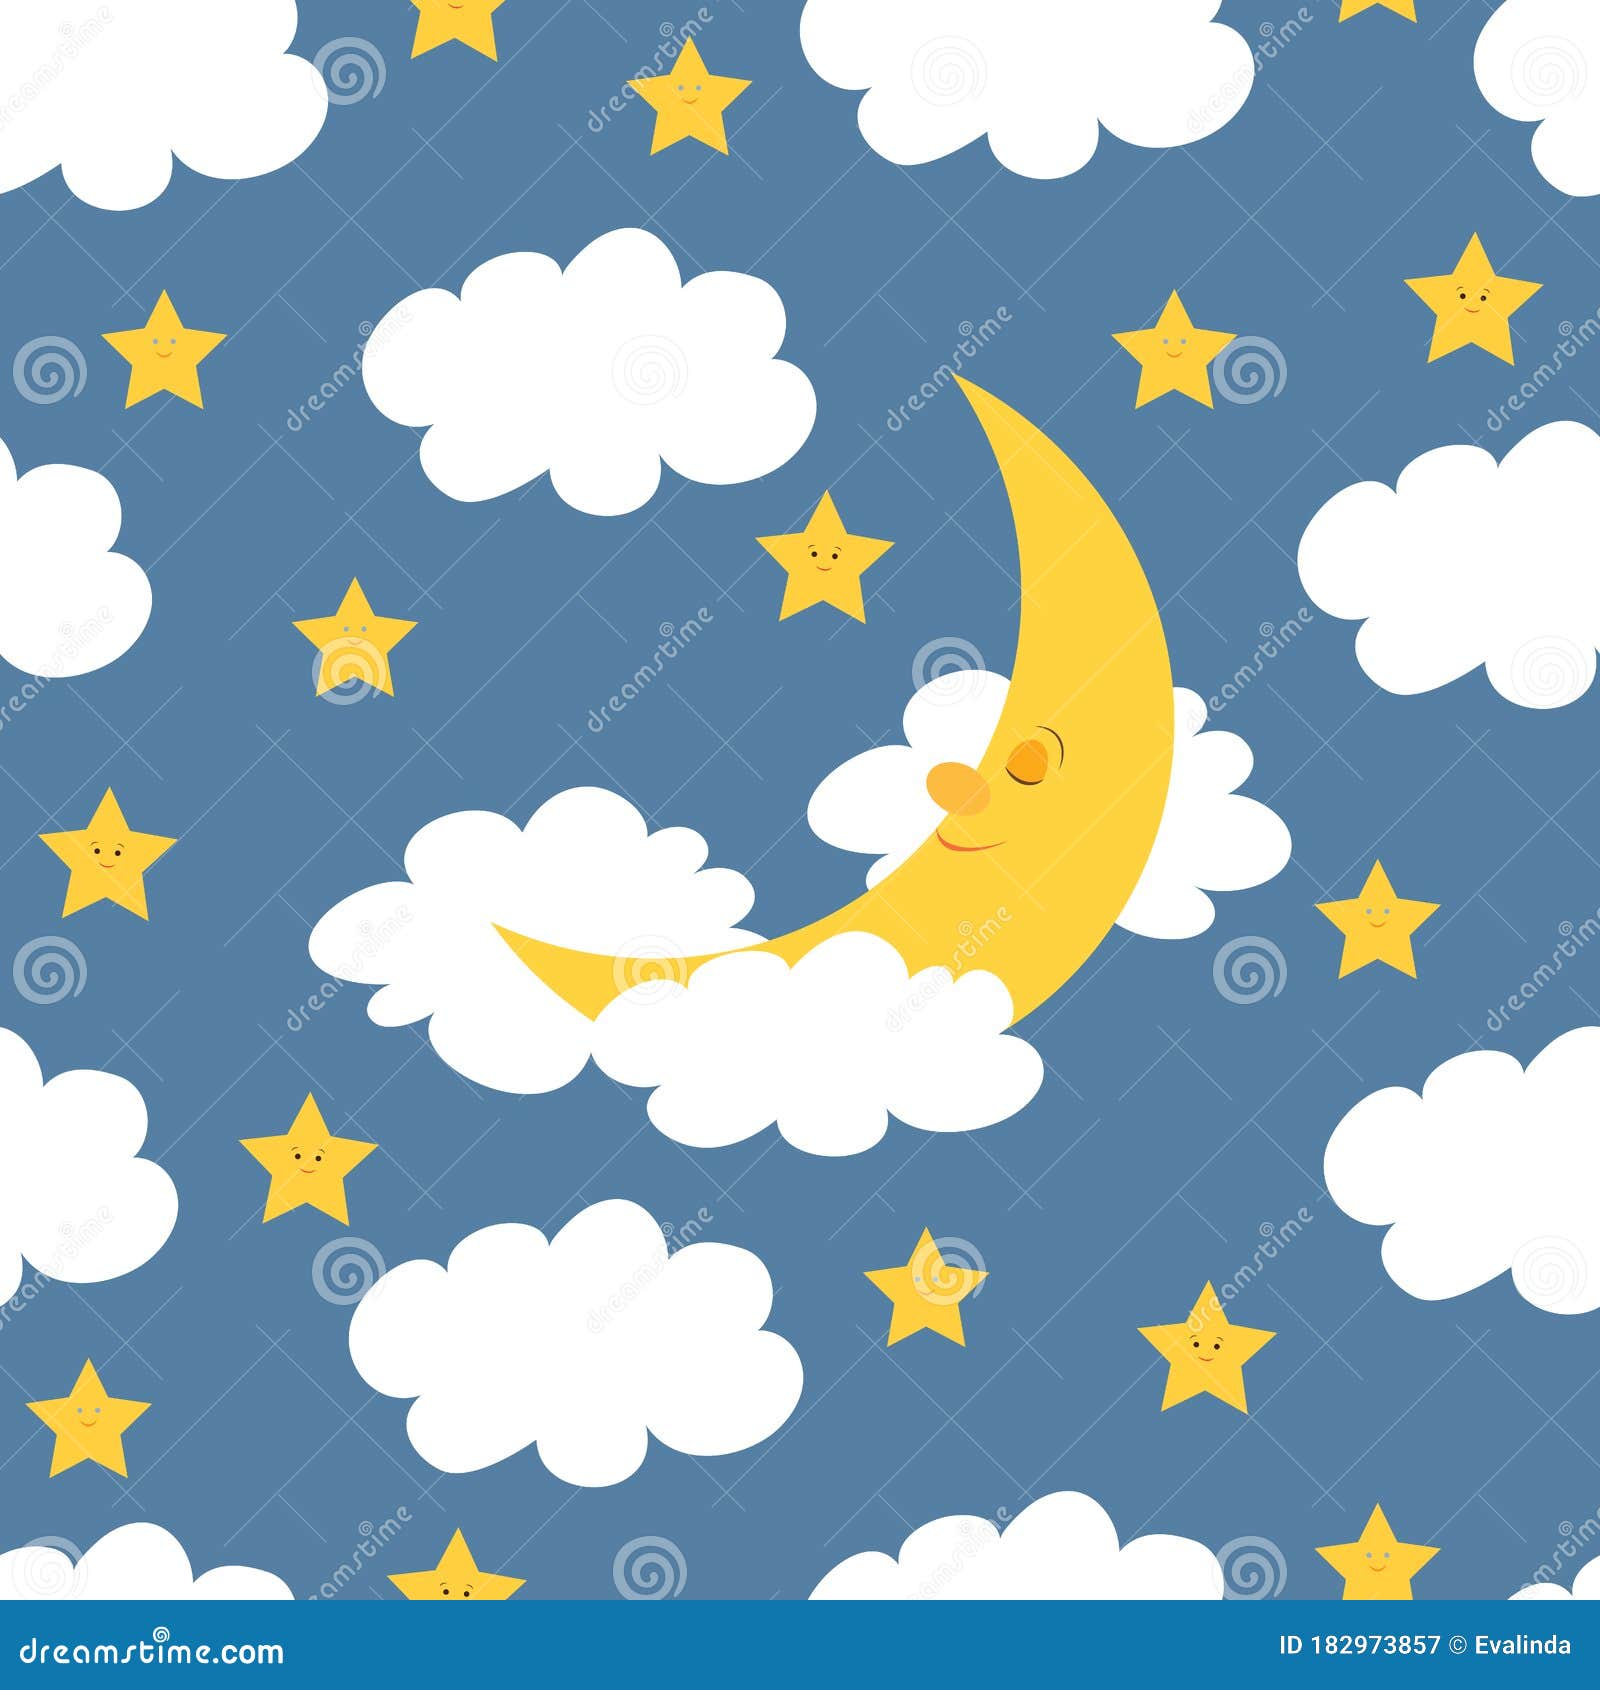 Sleeping Moon Seamless Pattern. Stock Vector - Illustration of calm ...